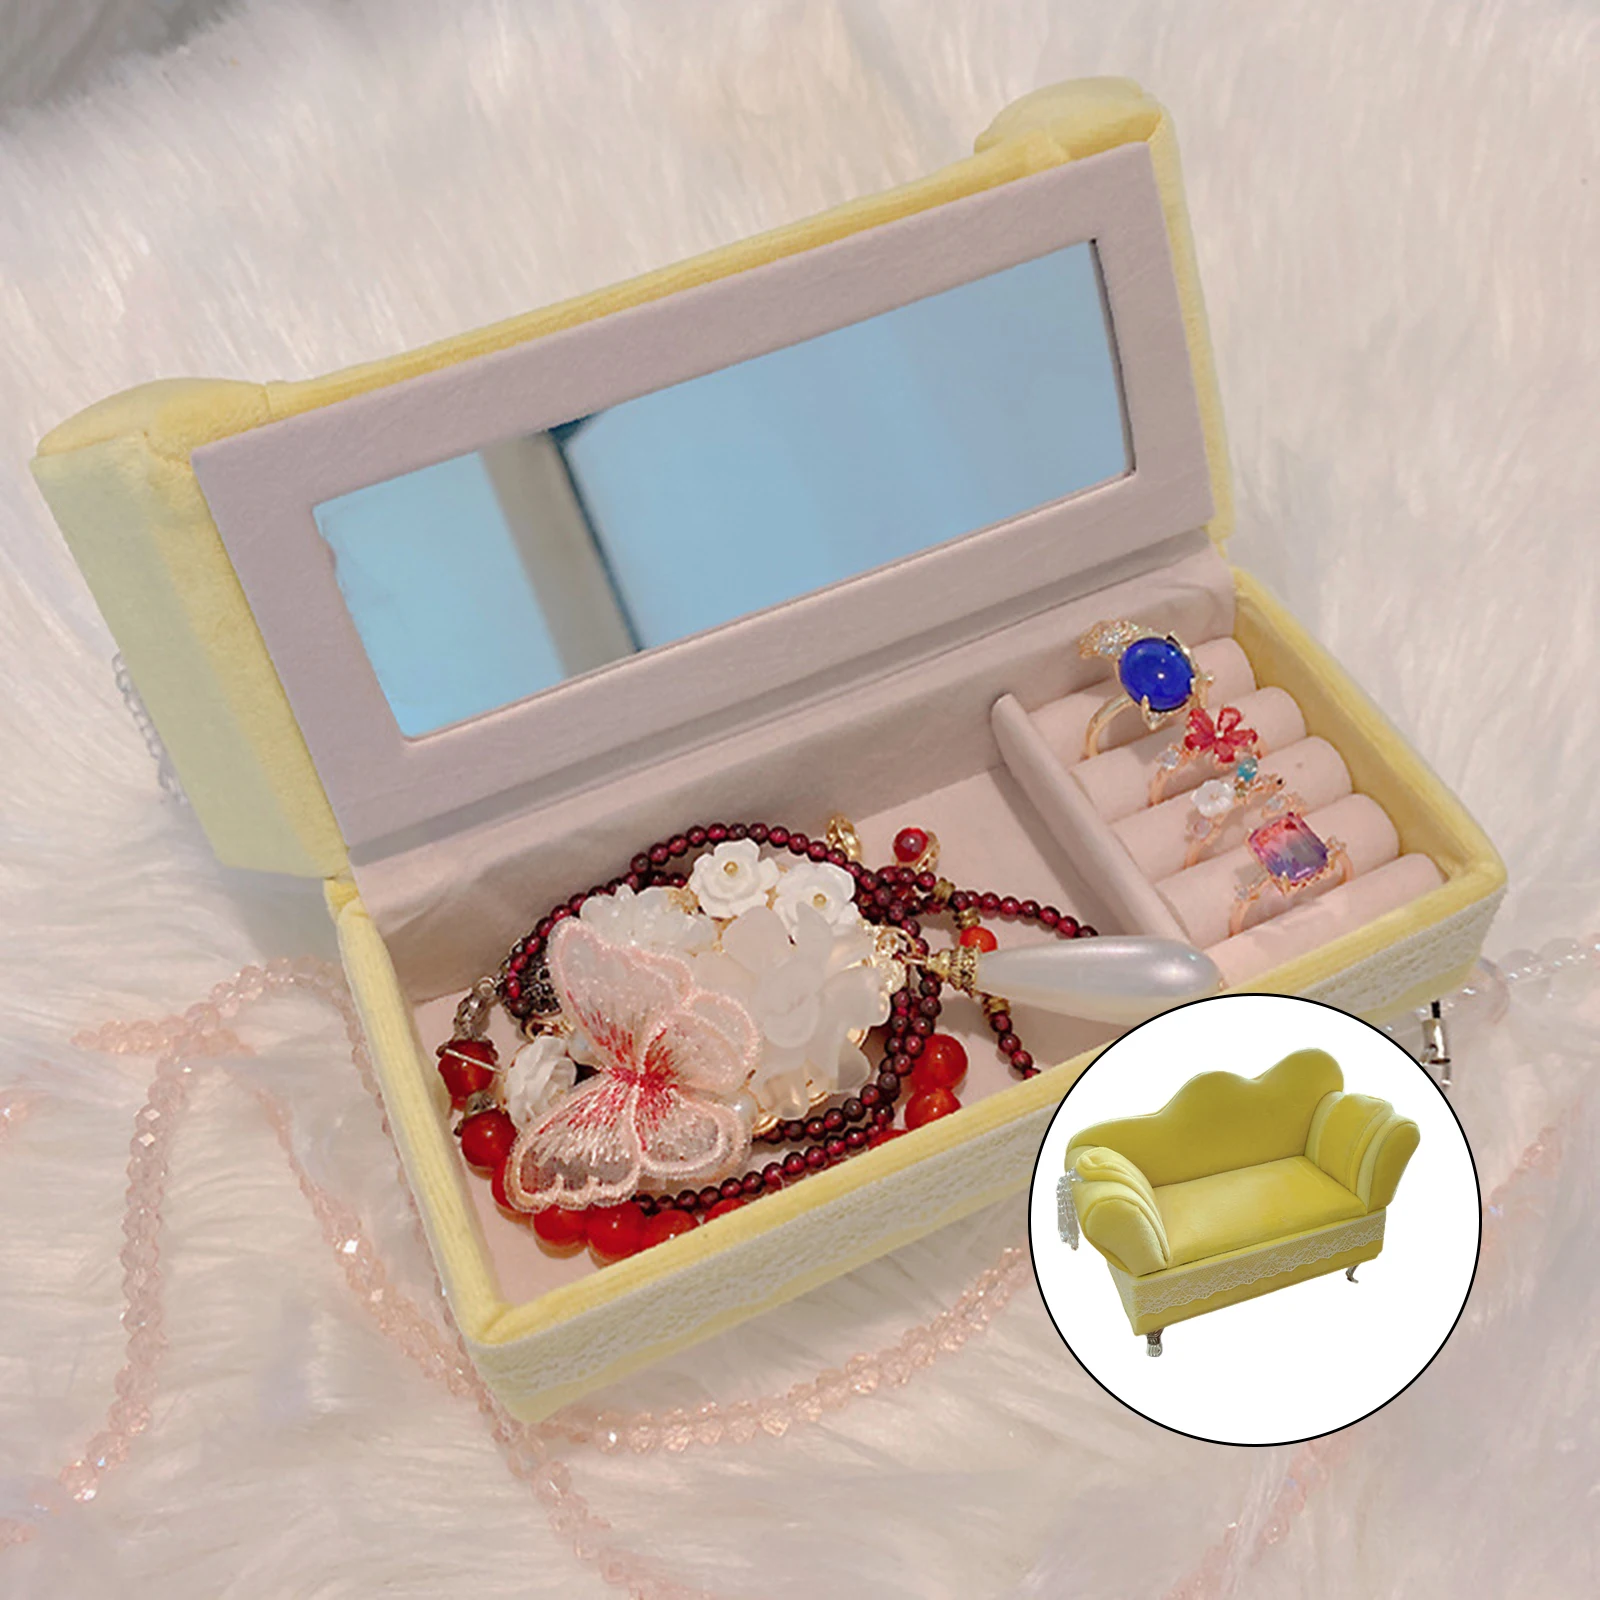 Romantic European Style Jewelry Box Organizer Display Storage Case Furniture Model for Rings Bracelet Bedroom